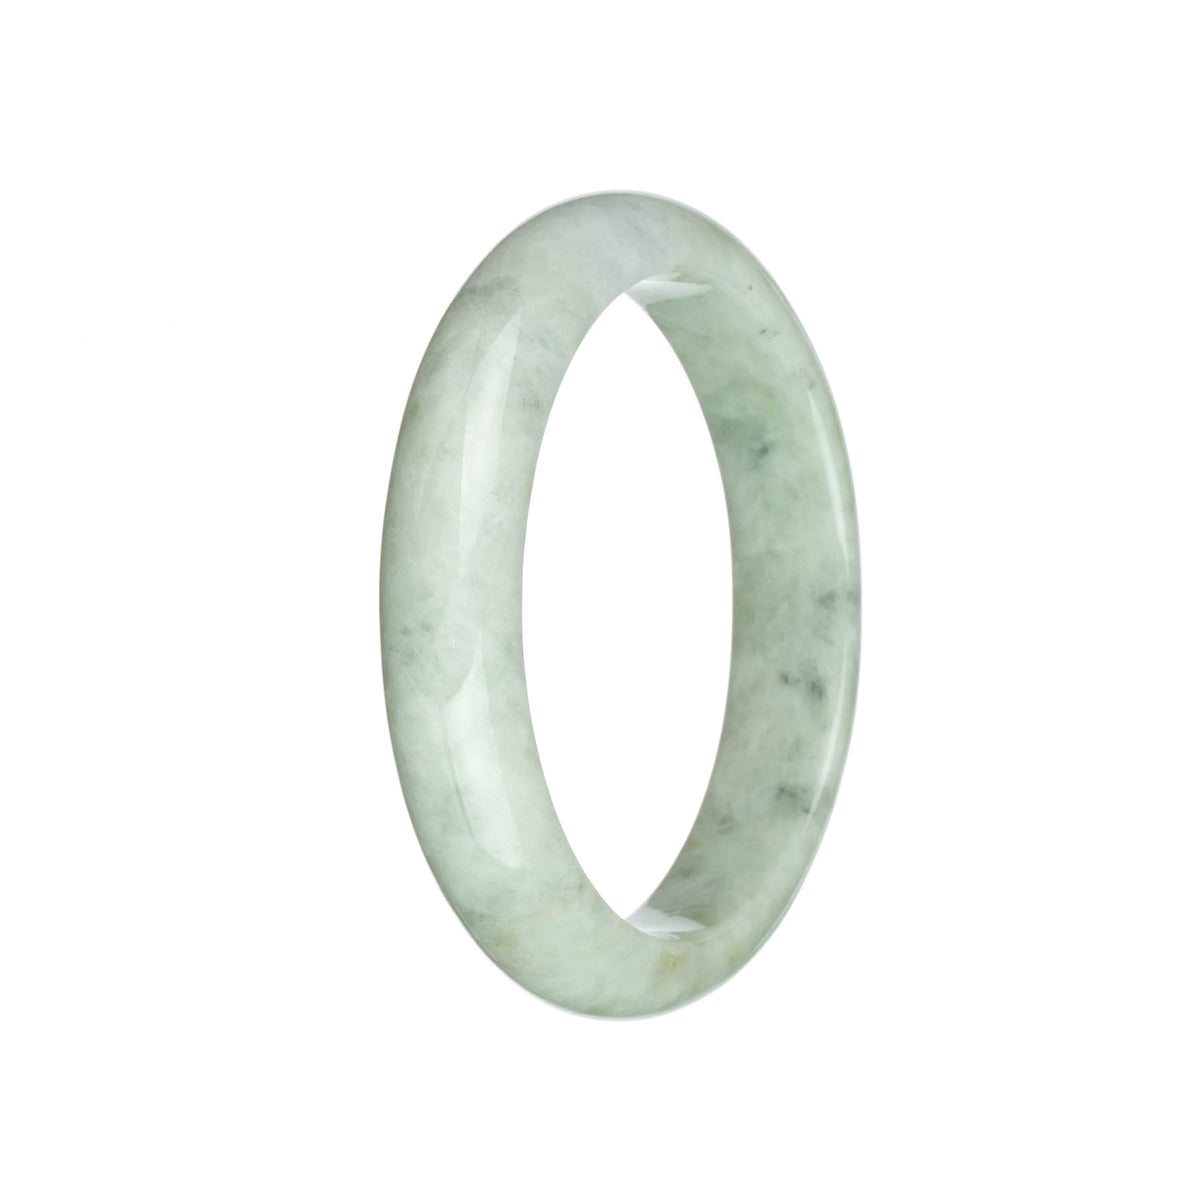 Certified Grade A Light Green and Light Grey with Grey Spots Jade Bangle Bracelet - 63mm Half Moon